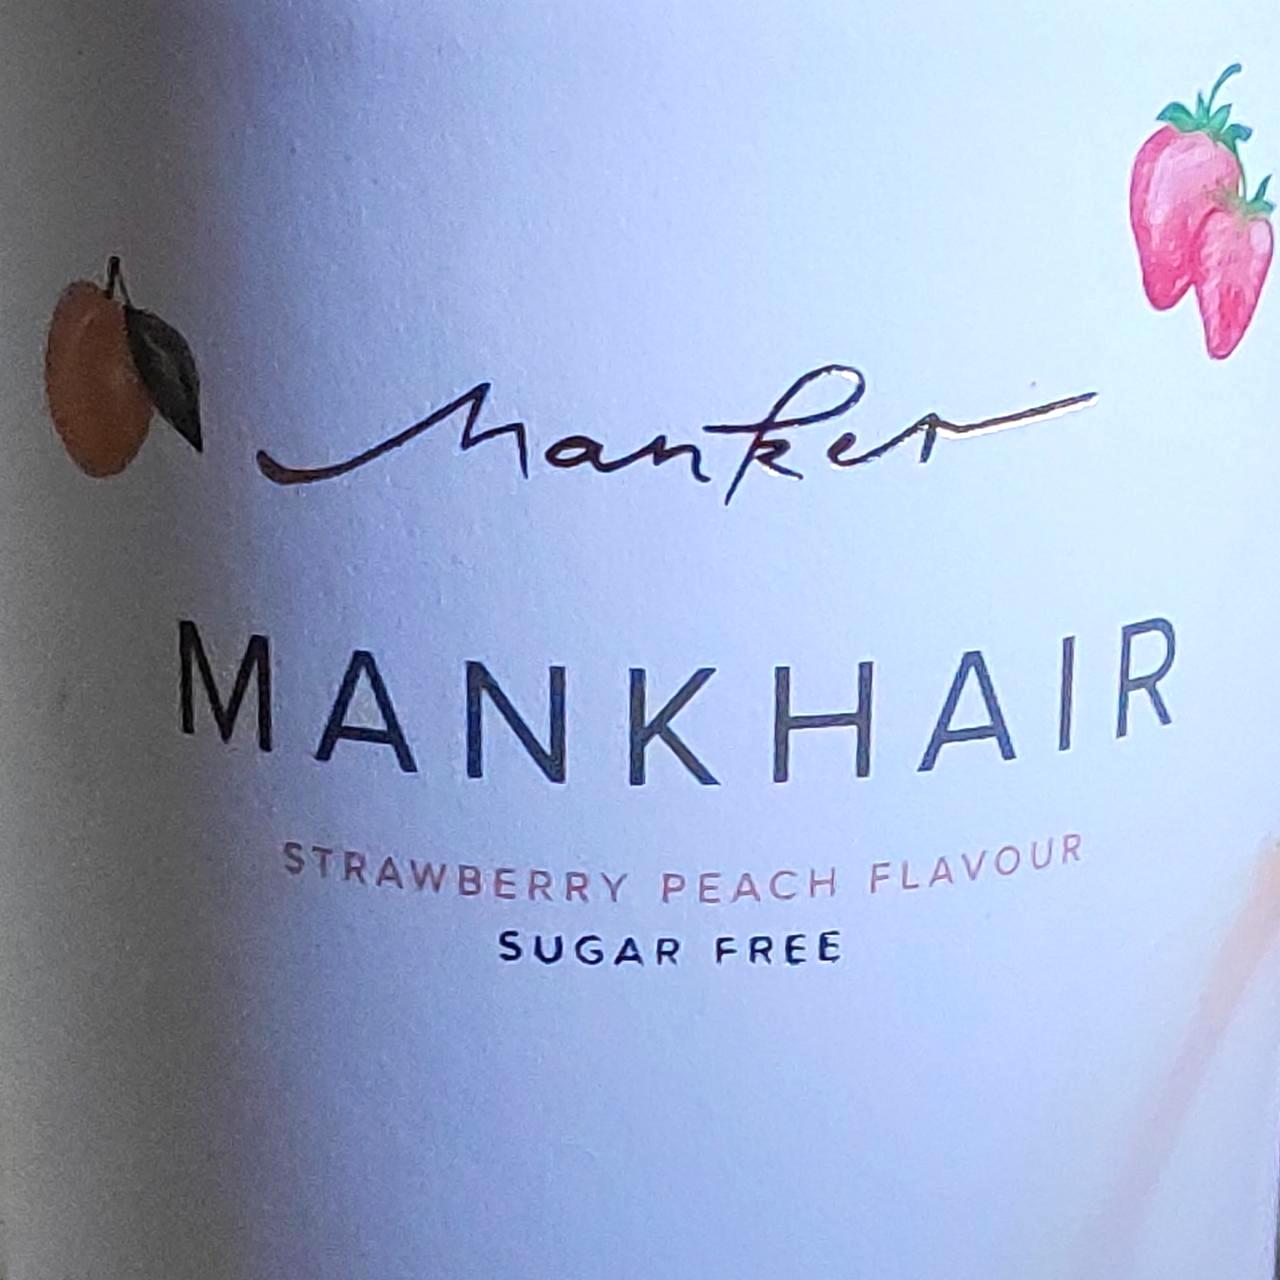 Képek - Mankhair Strawberry peach flavour Manker